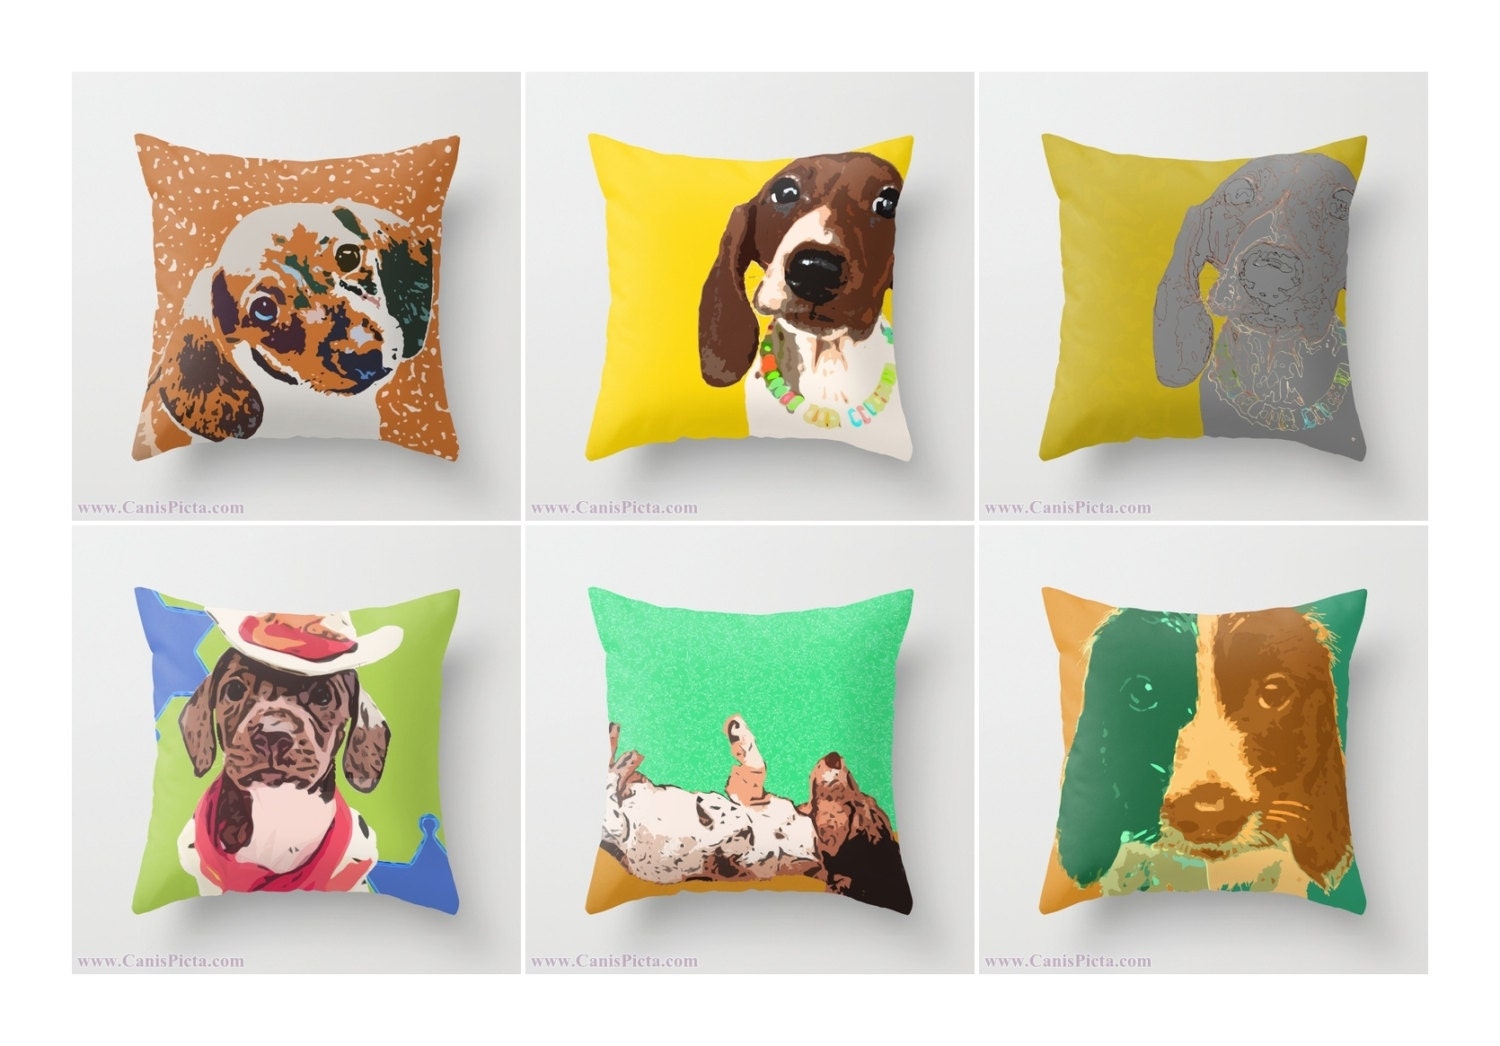 Dachshund Dog ONE 16x16 Throw Pillow Cover Graphic Print Doxie Whimsical Puppy Bright Home Decor Pop Couch Art Loft Urban Fun Kids Gift